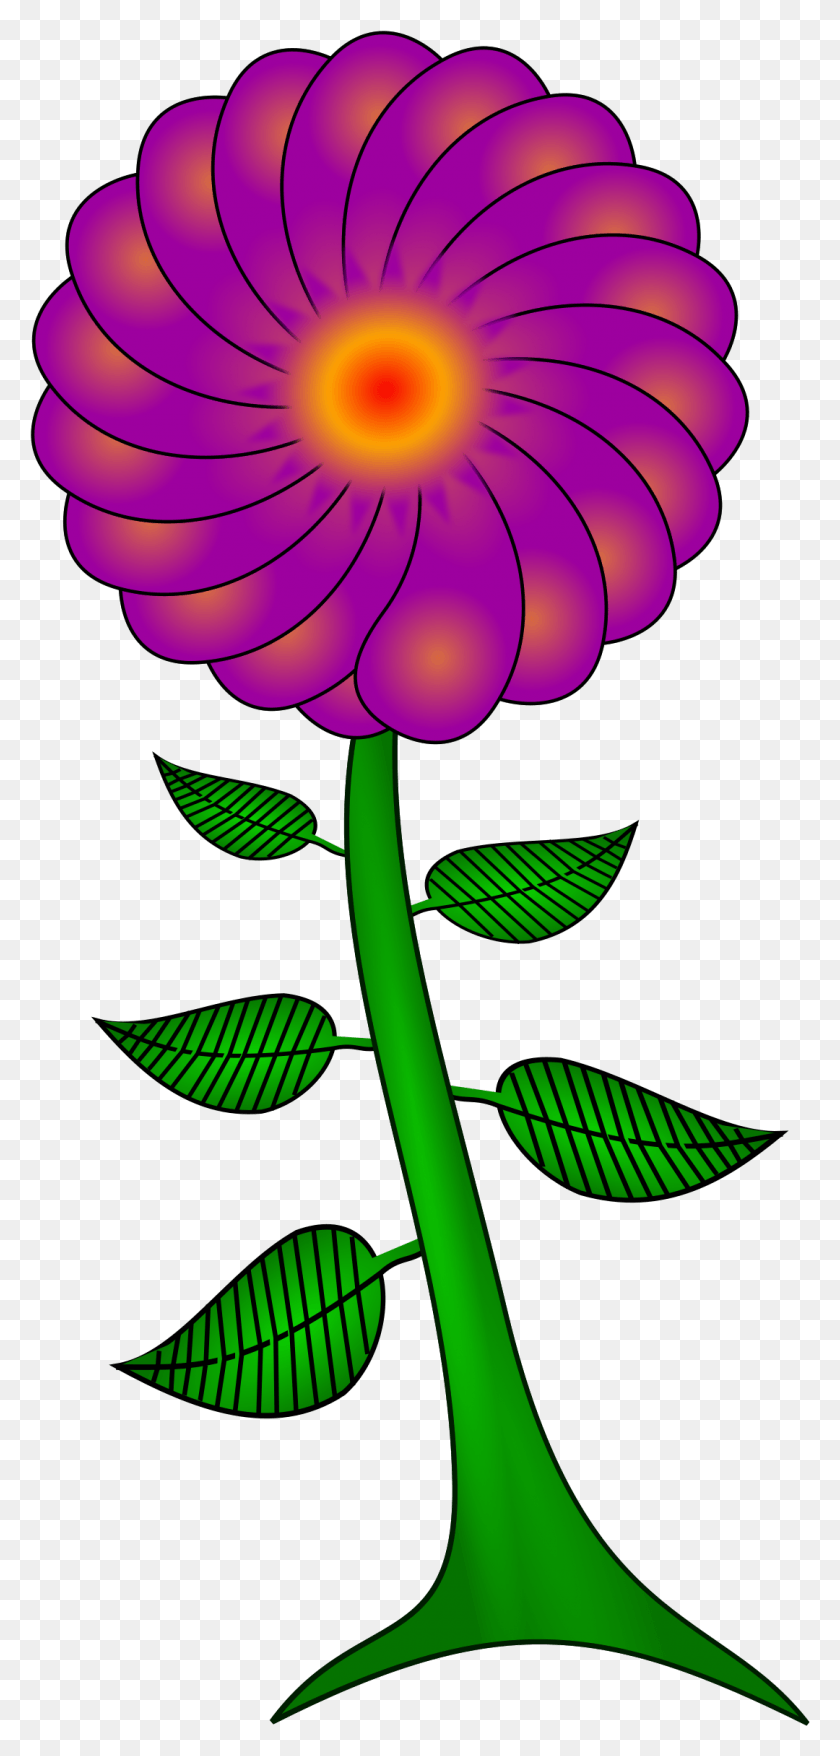 1080x2349 This Free Icons Design Of Paisley Flower, Planta, Flor, Pétalo Hd Png Descargar